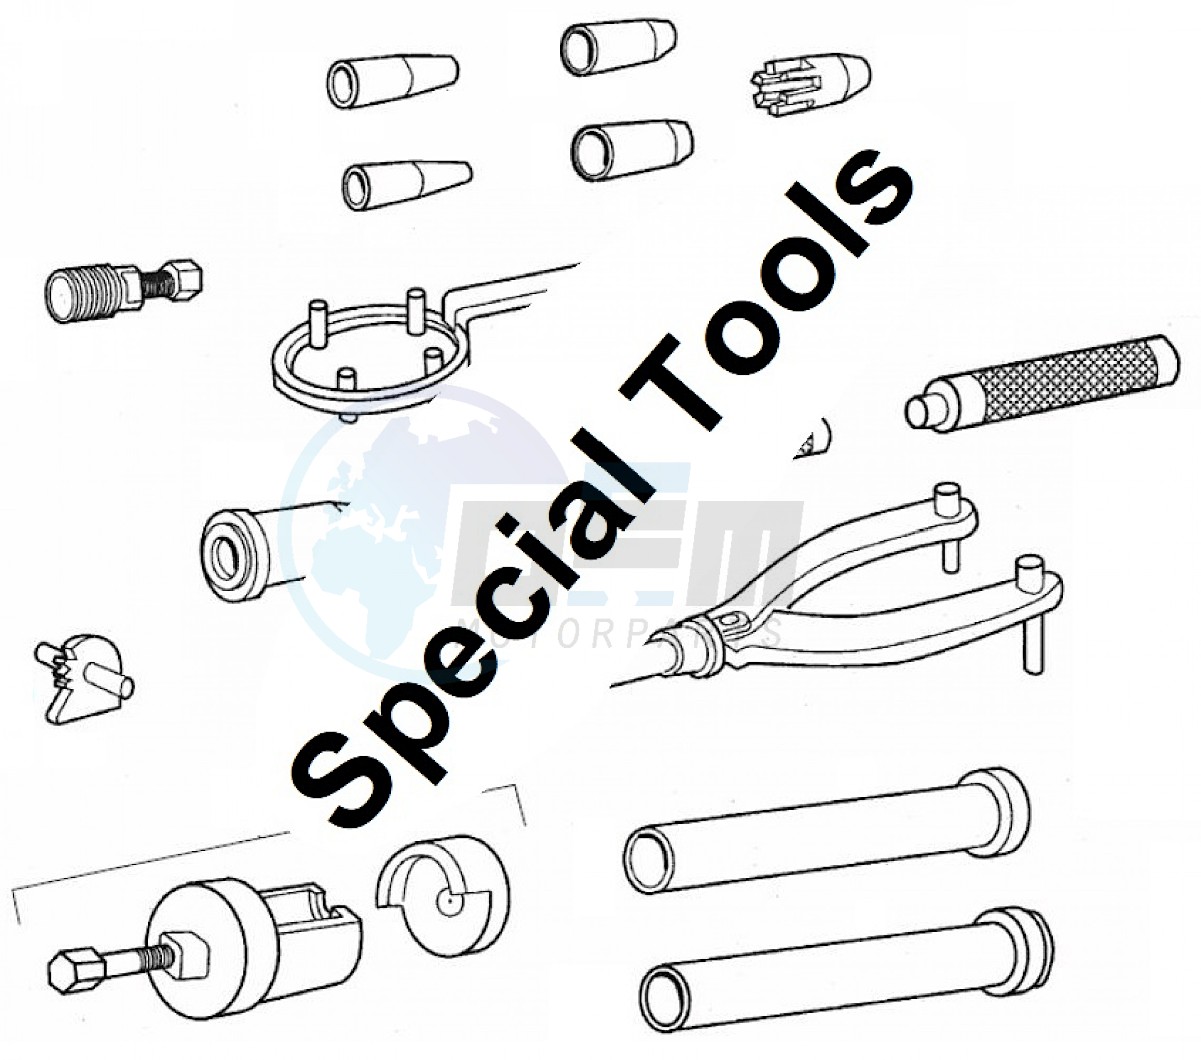 Special tools (Positions) blueprint